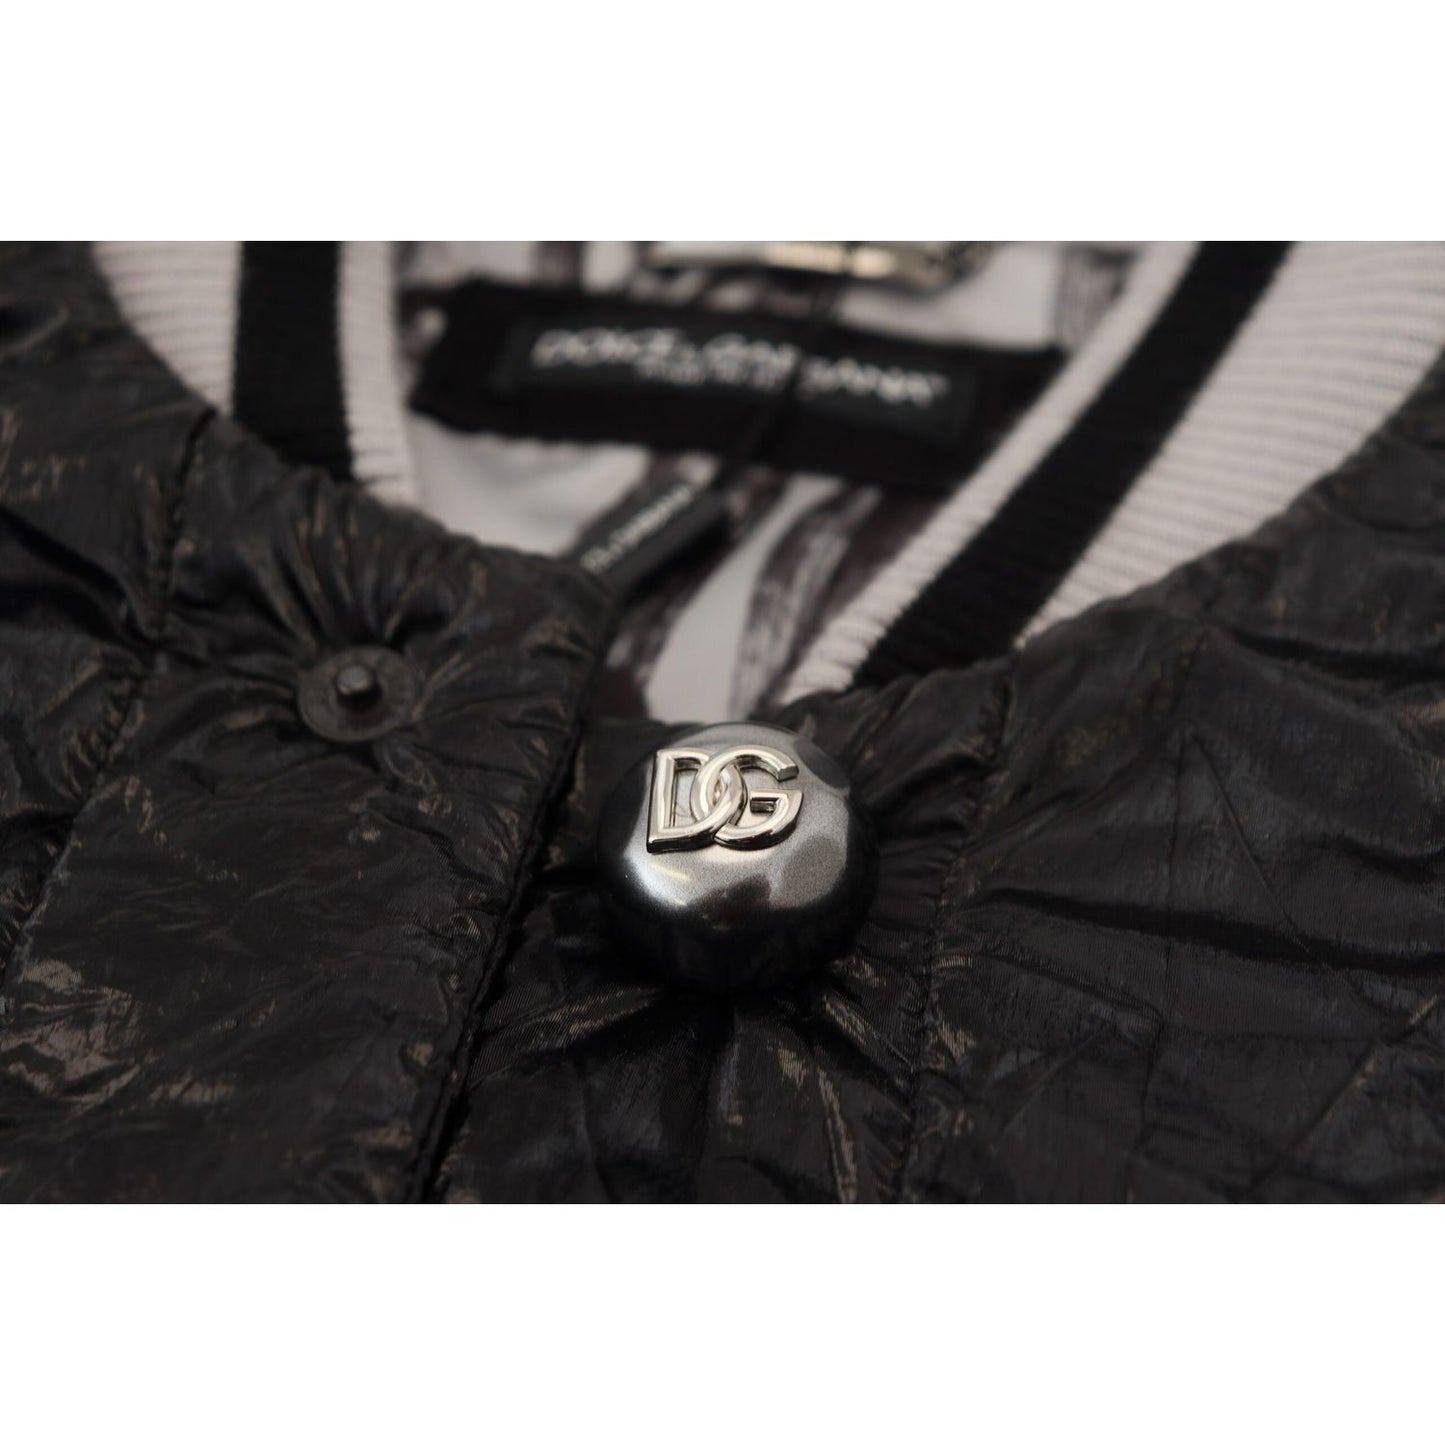 Dolce & Gabbana Sleek Black Bomber Jacket black-dg-logo-print-lining-bomber-jacket